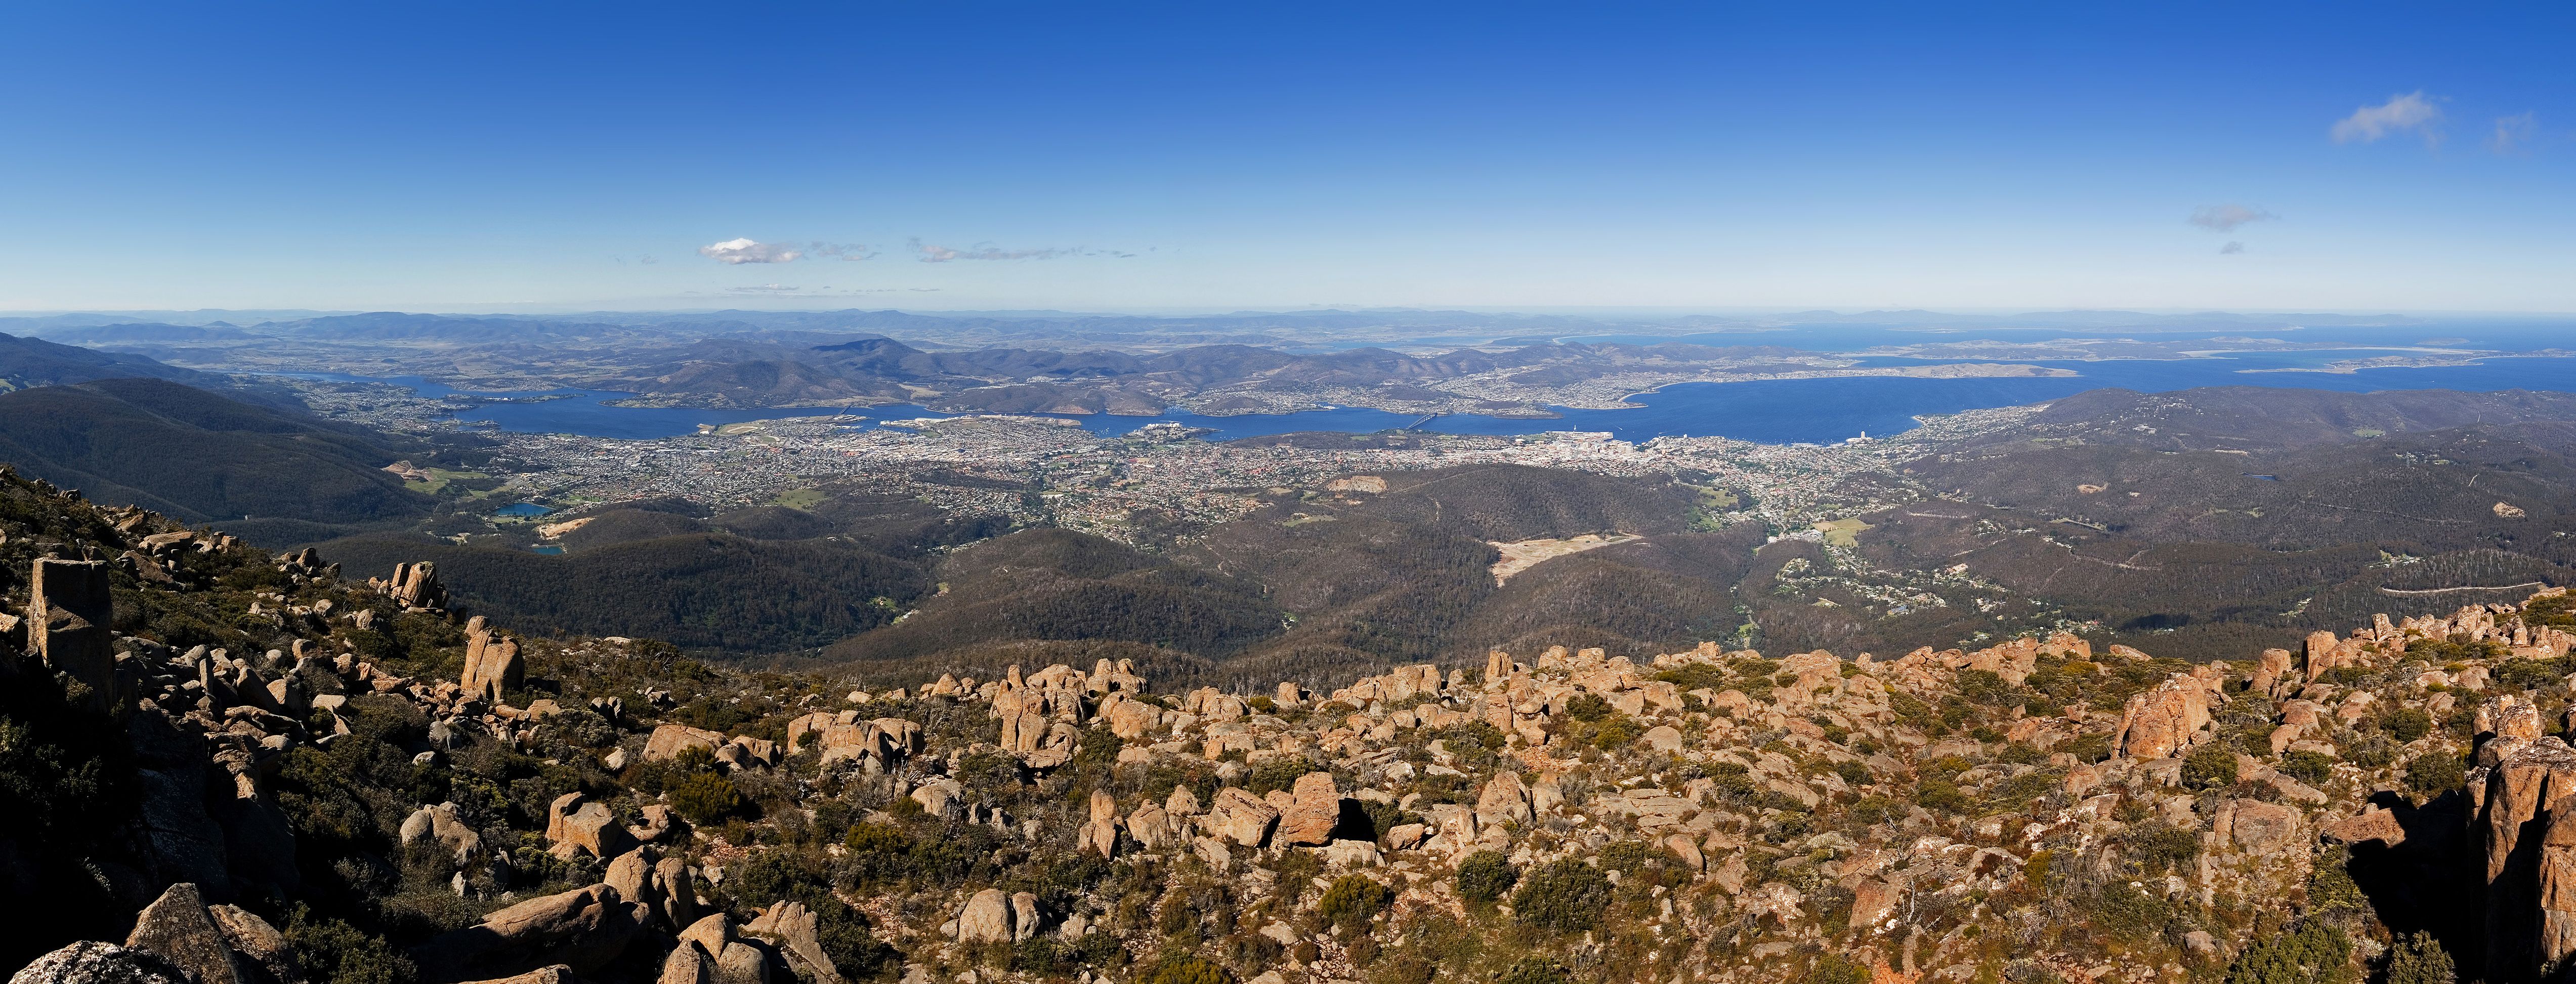 Hobart_from_Mount_Wellington_Panorama_1.jpg